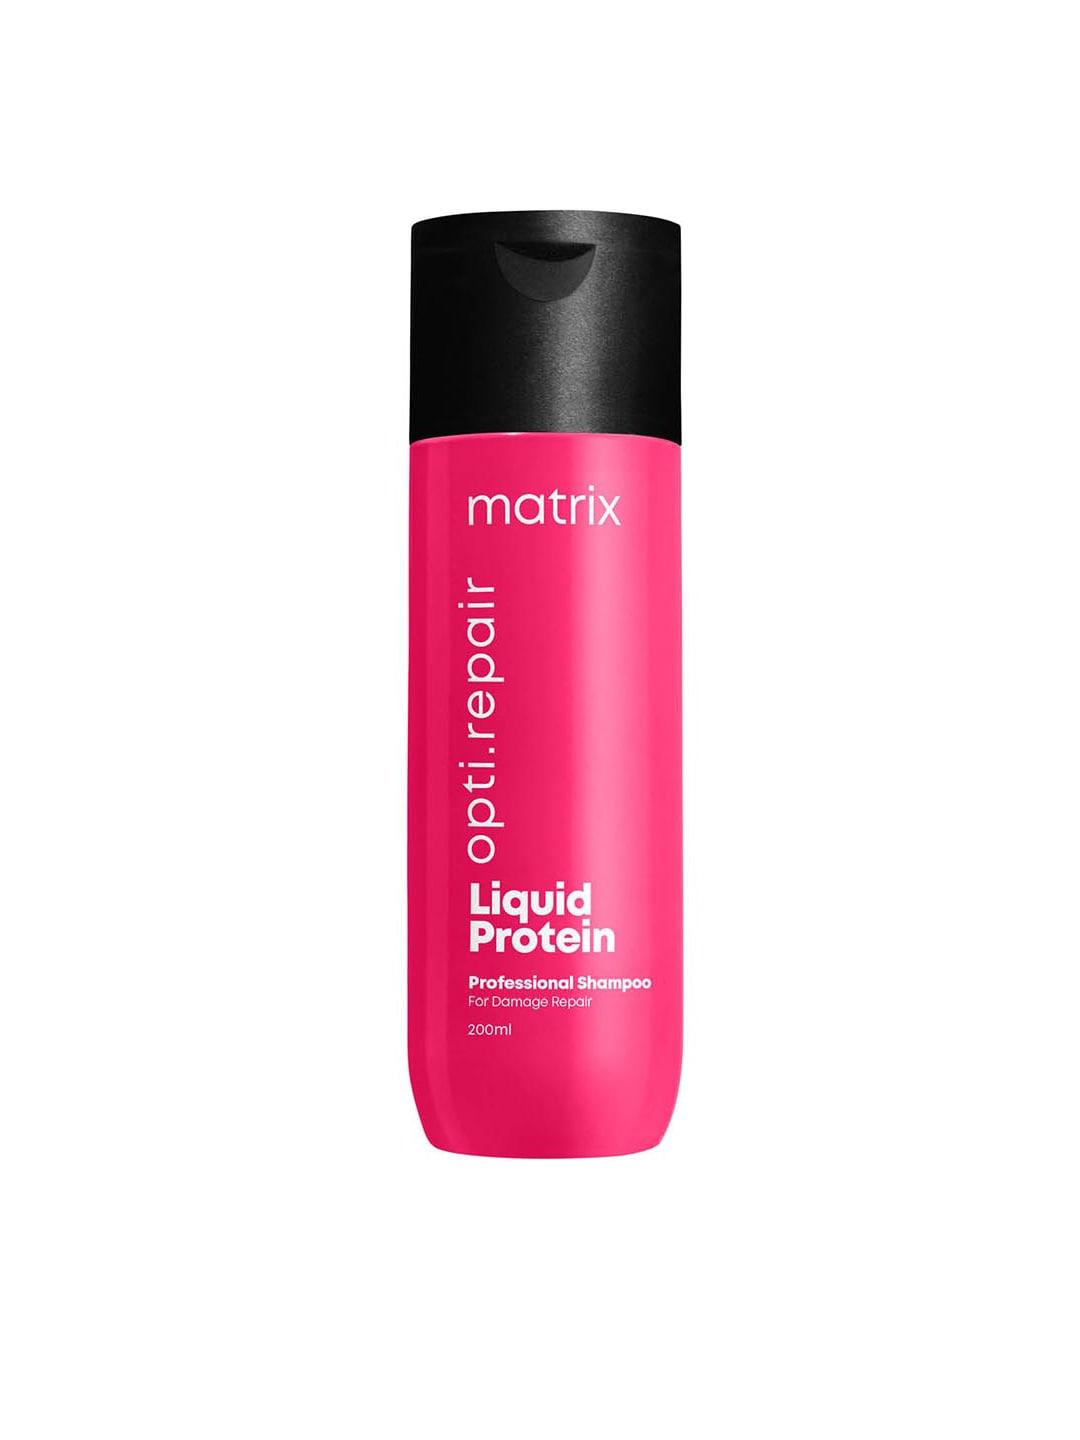 matrix opti repair professional liquid protein shampoo for damage repair - 200 ml